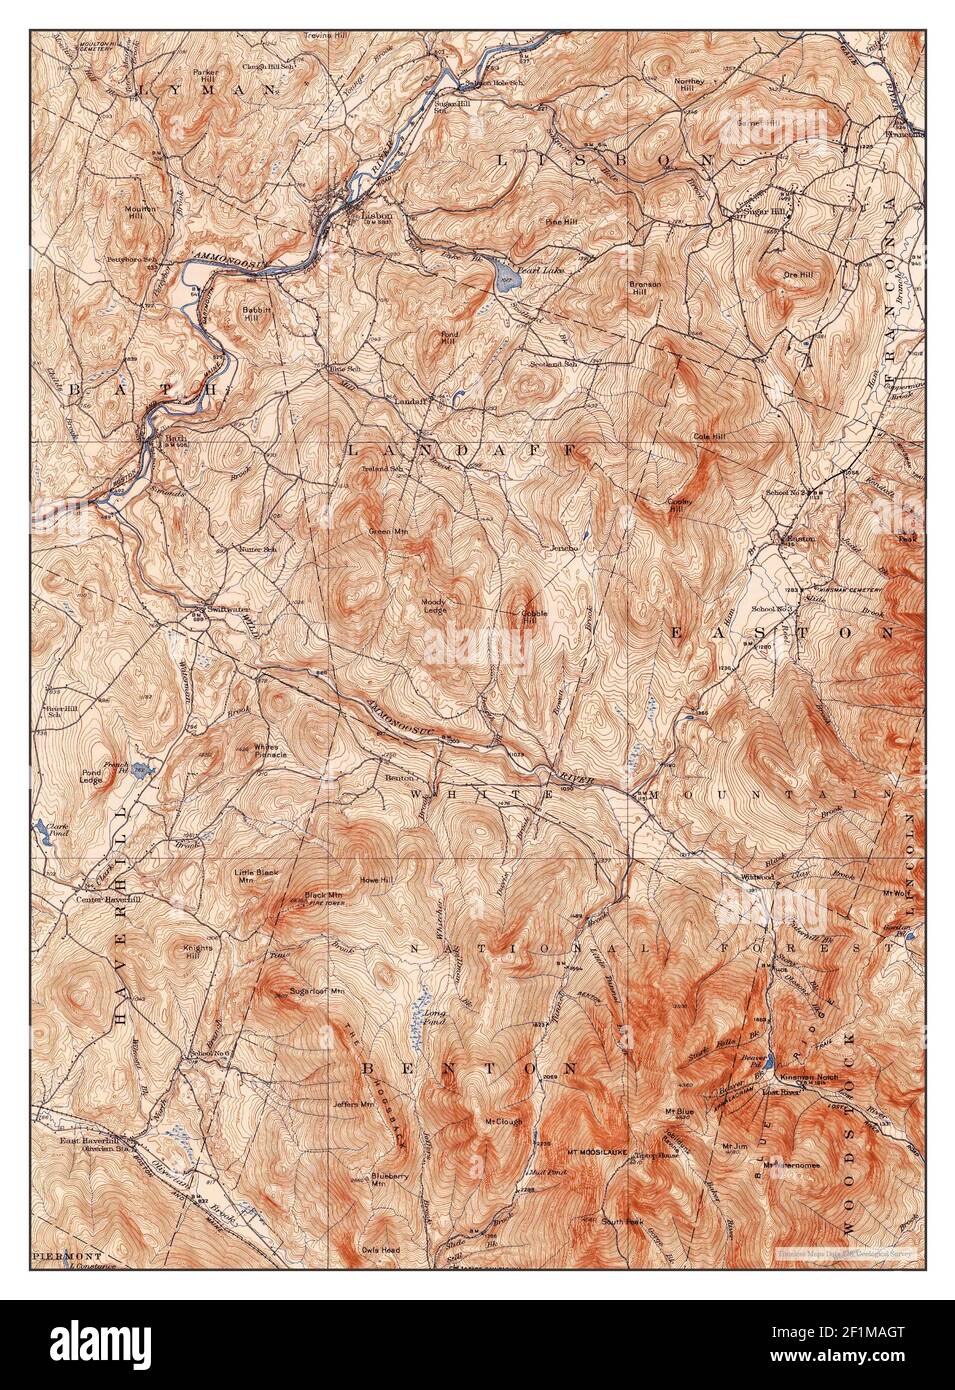 Moosilauke, New Hampshire, map 1932, 1:62500, United States of America by Timeless Maps, data U.S. Geological Survey Stock Photo